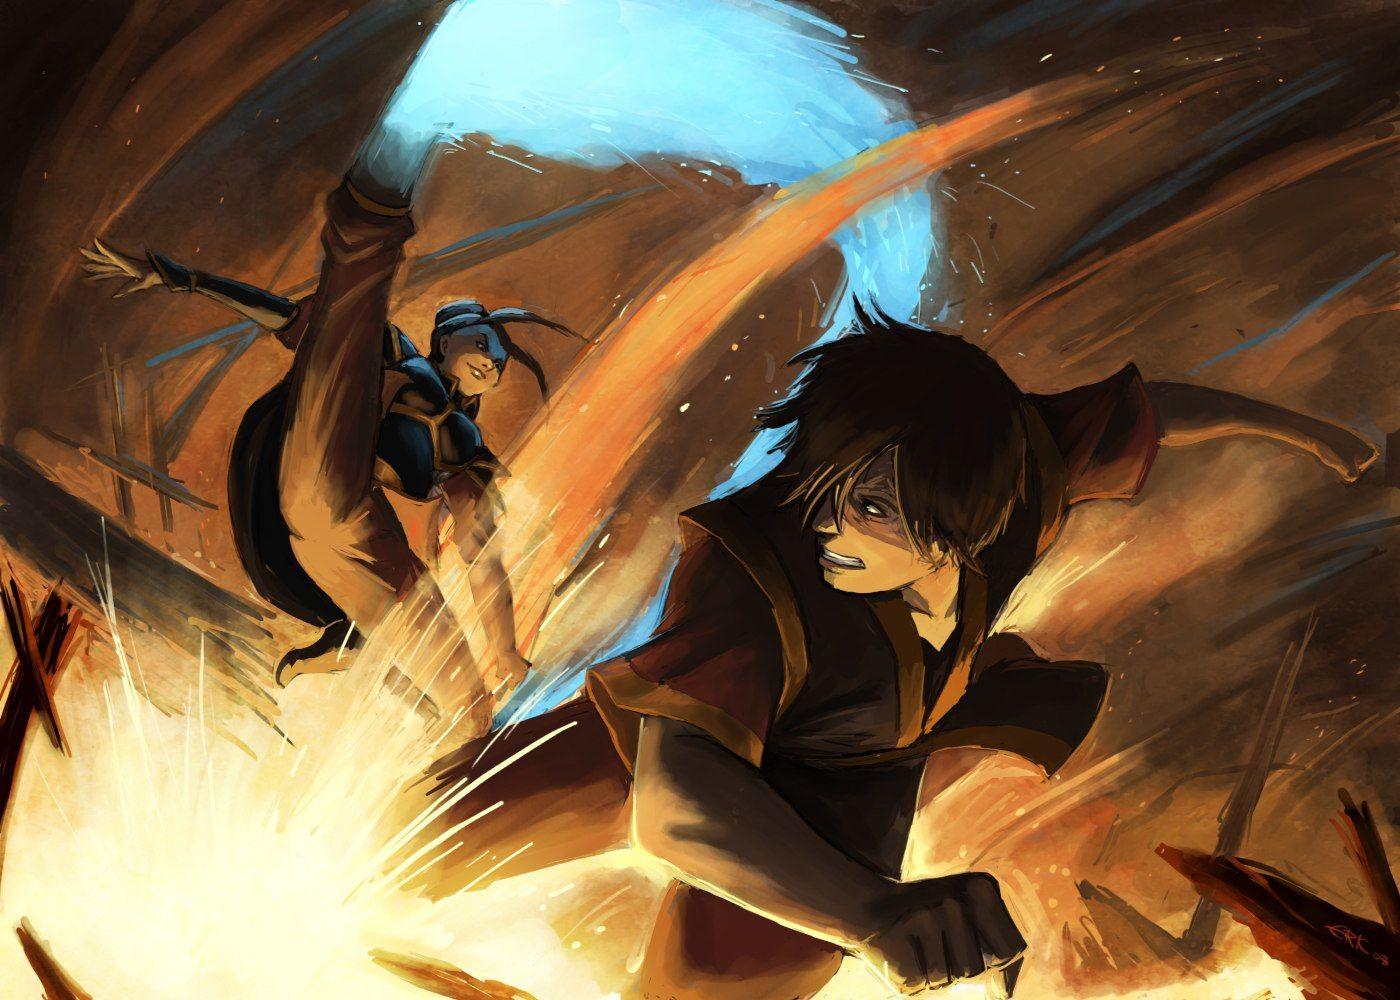 Remember that one amazing Agni Kai duel between Zuko and Azula? Yes